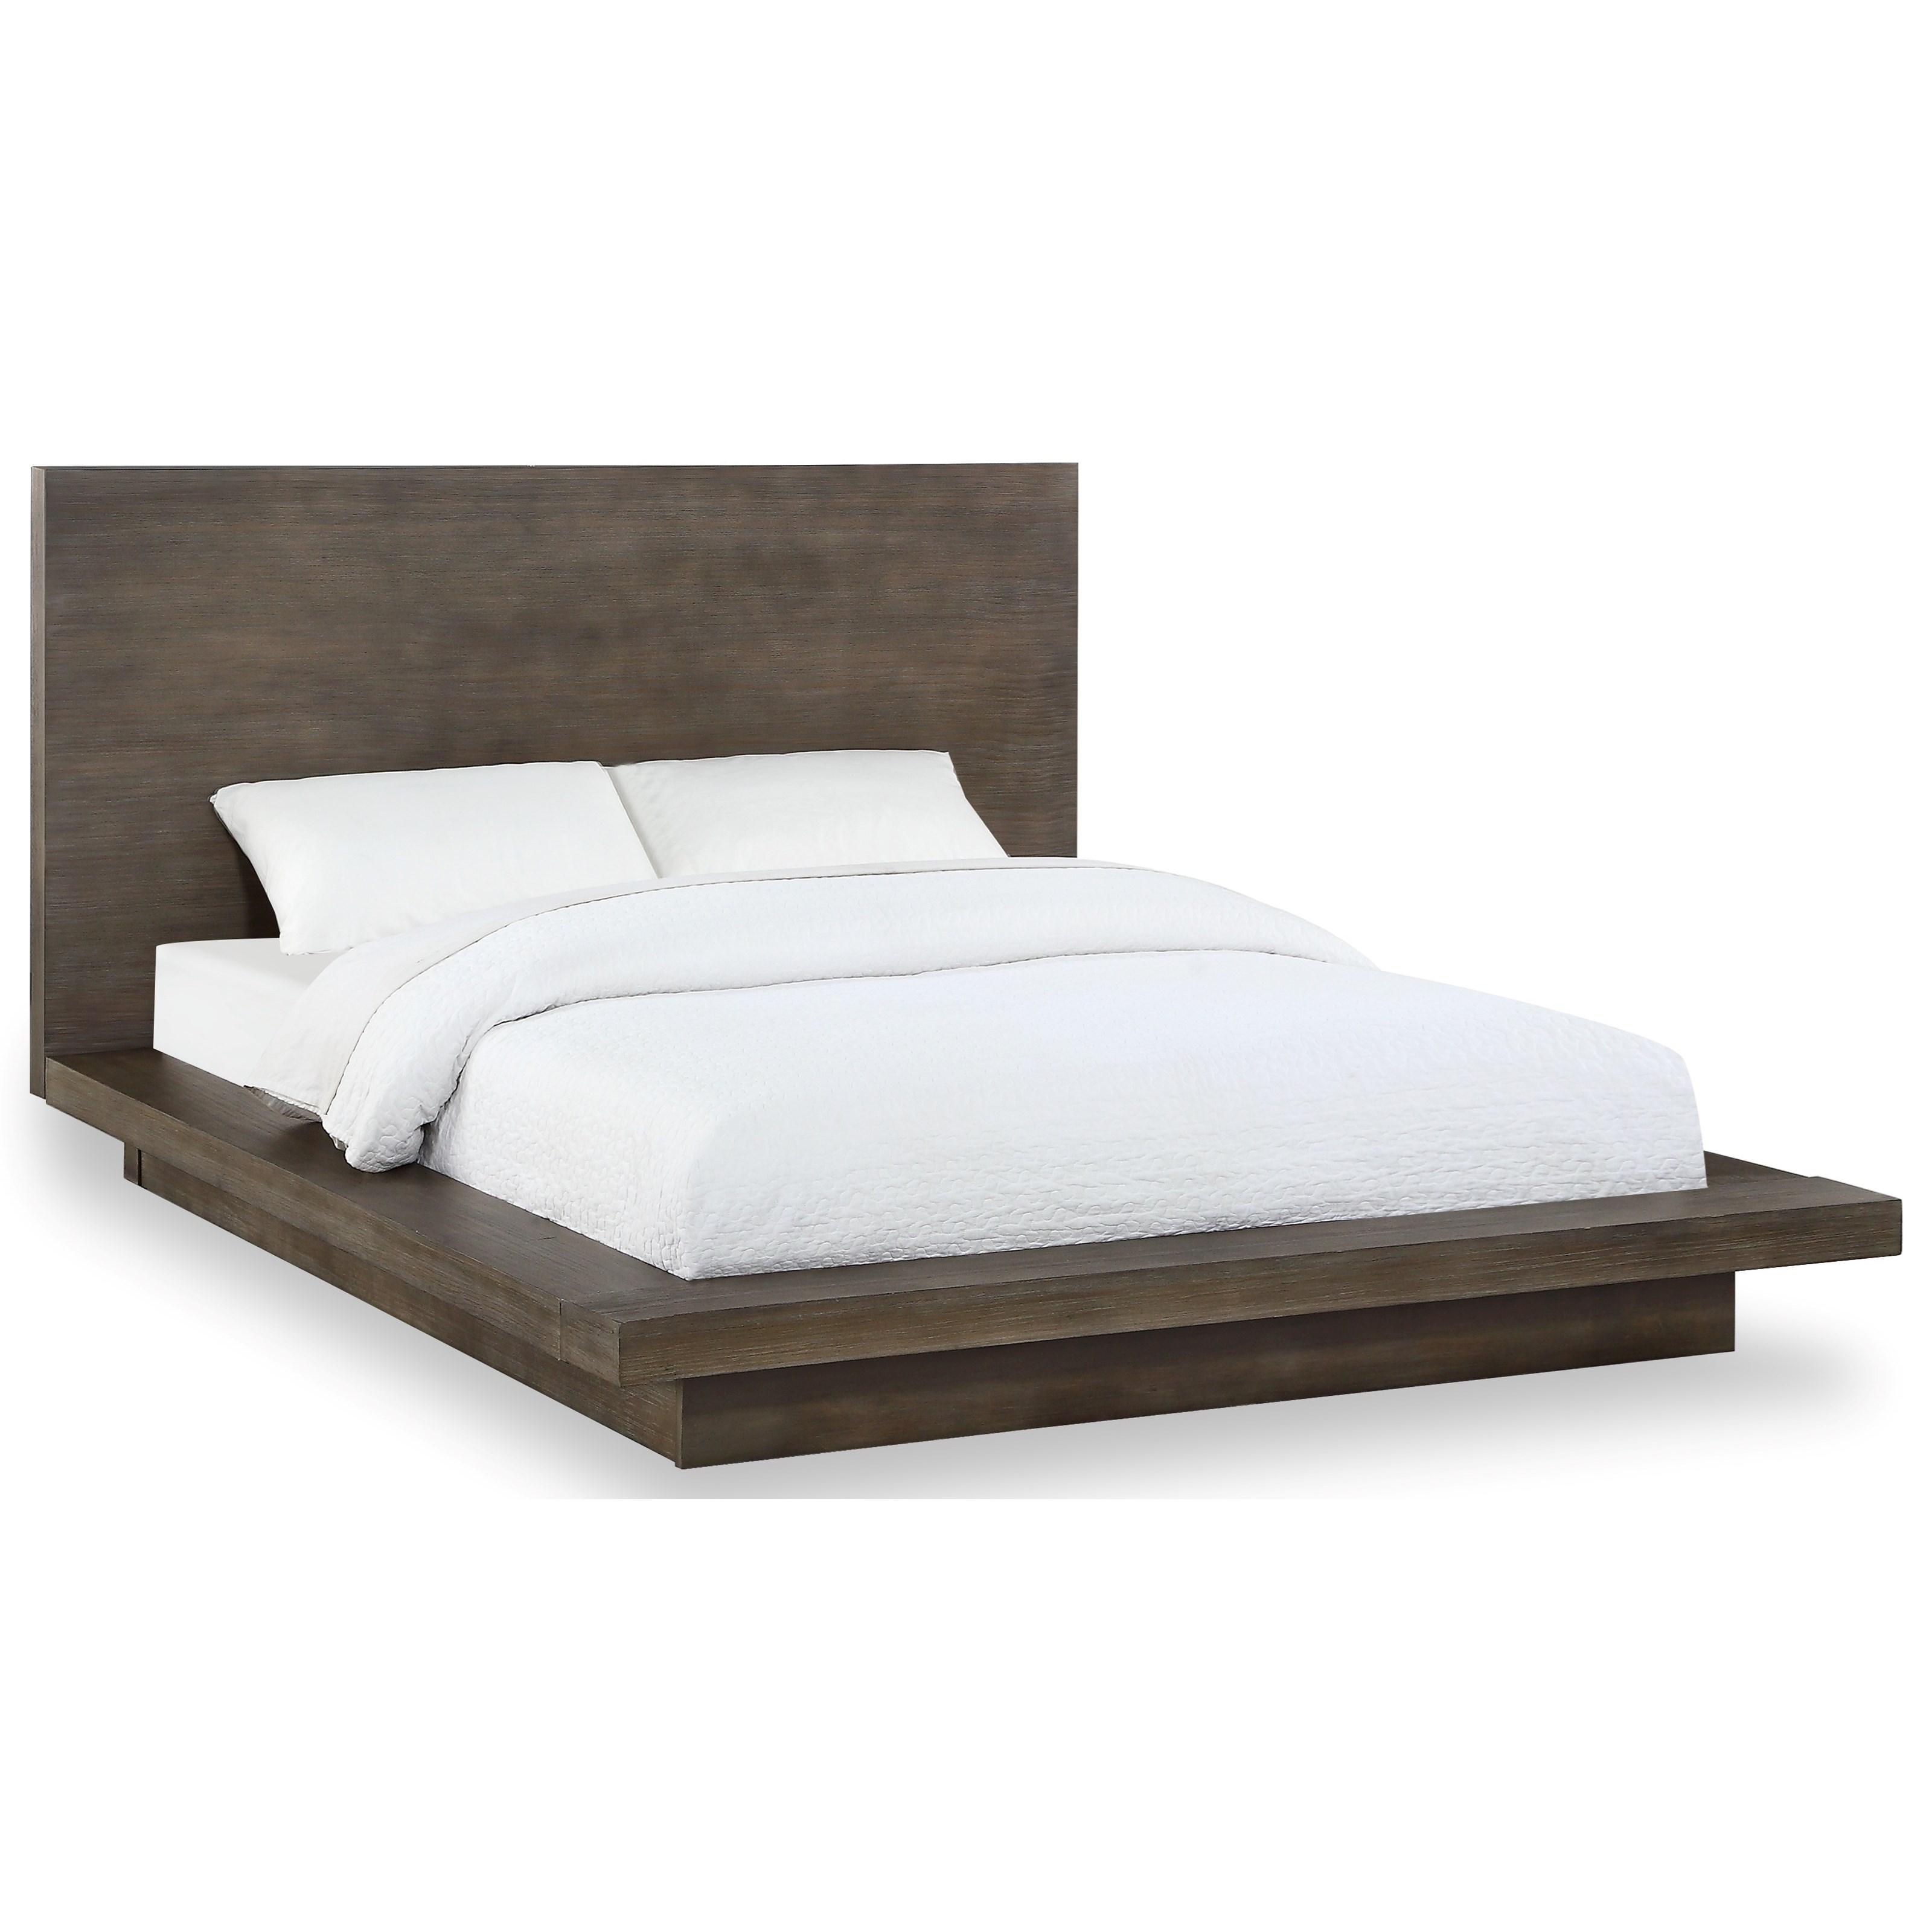 

    
Rustic Dark Pine Queen Platform Bedroom Set 5Pcs MELBOURNE by Modus Furniture
